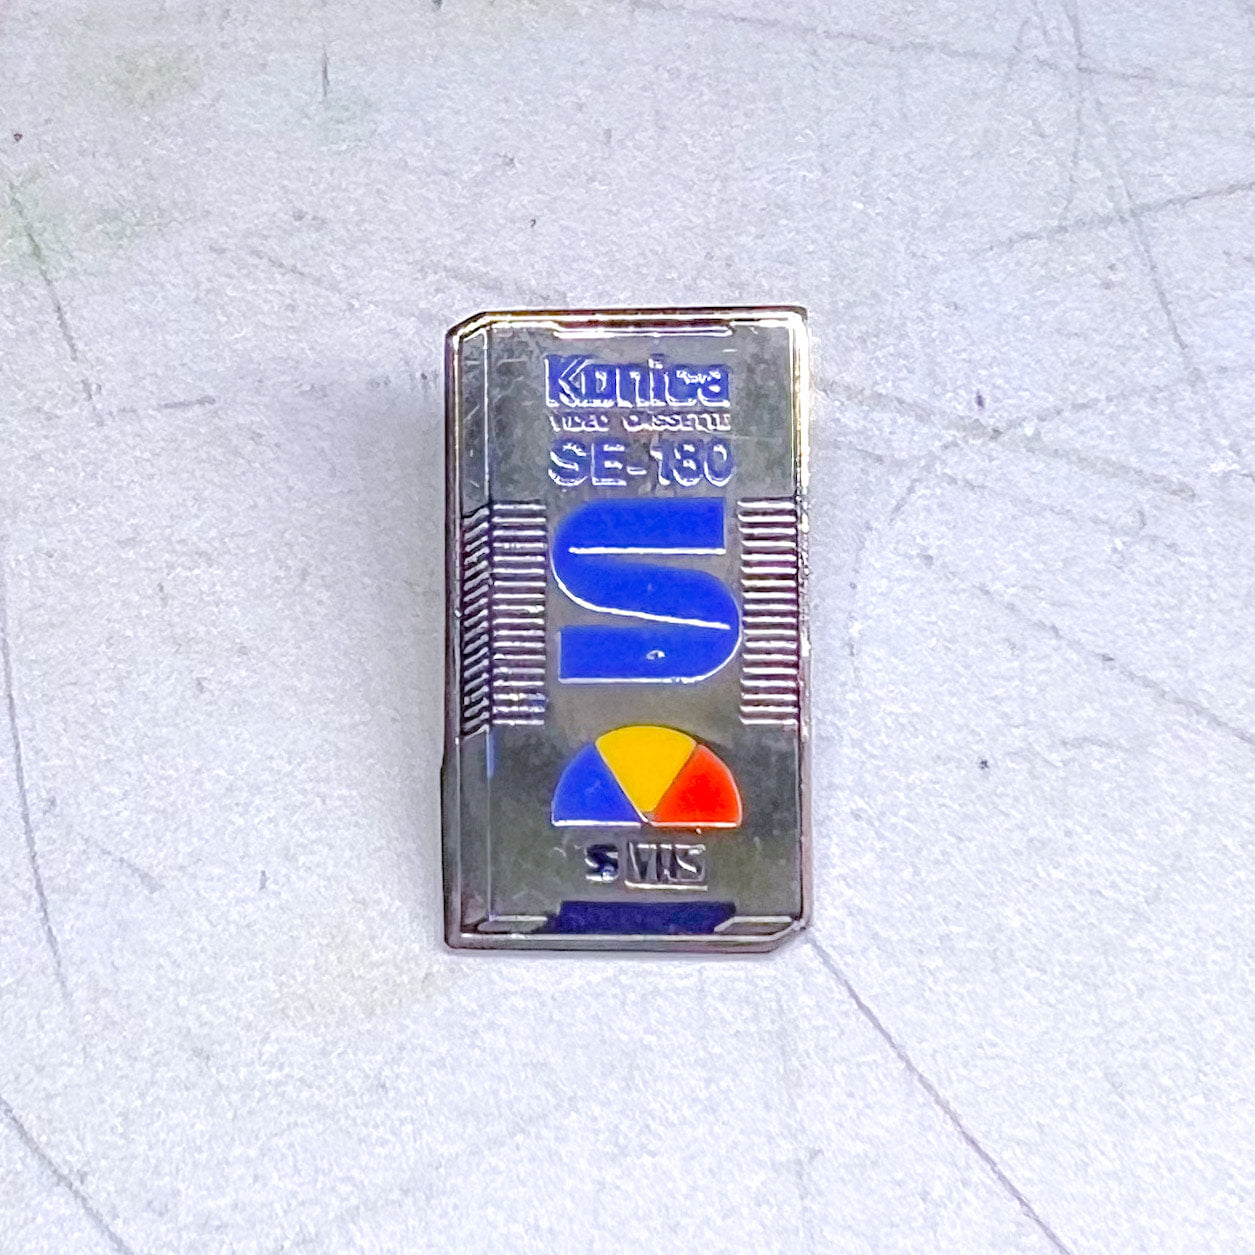 Vintage 1990s VHS Cassette Enamel Pin